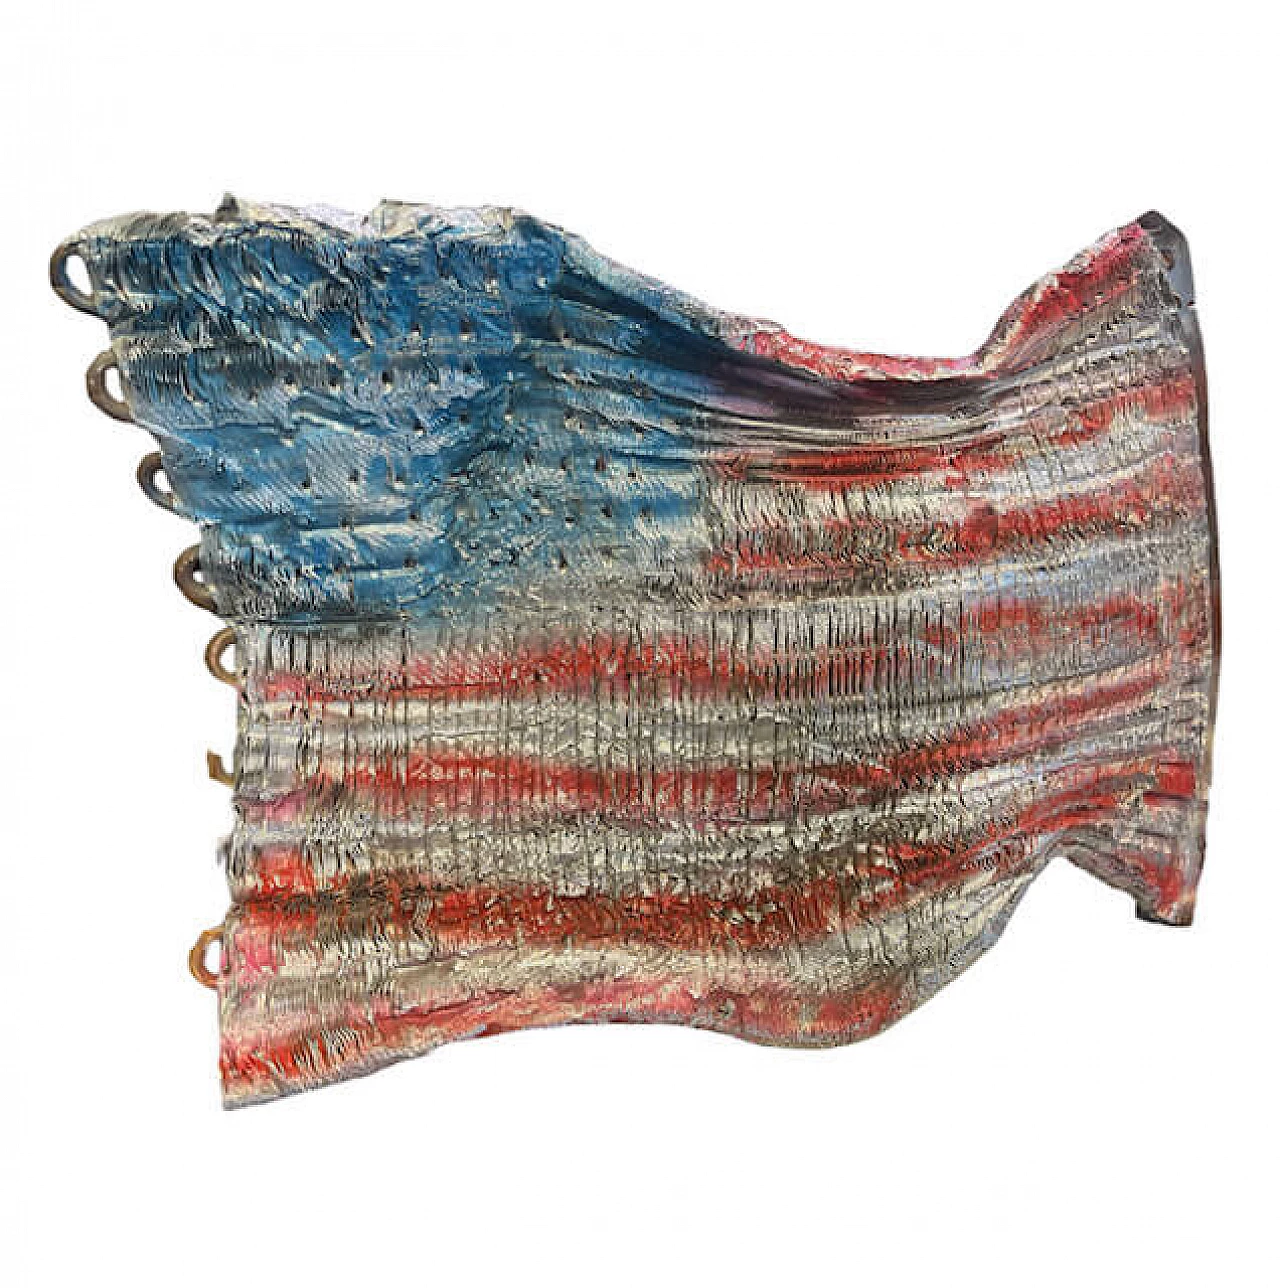 M'HORÒ sculpture depicting the American flag 3